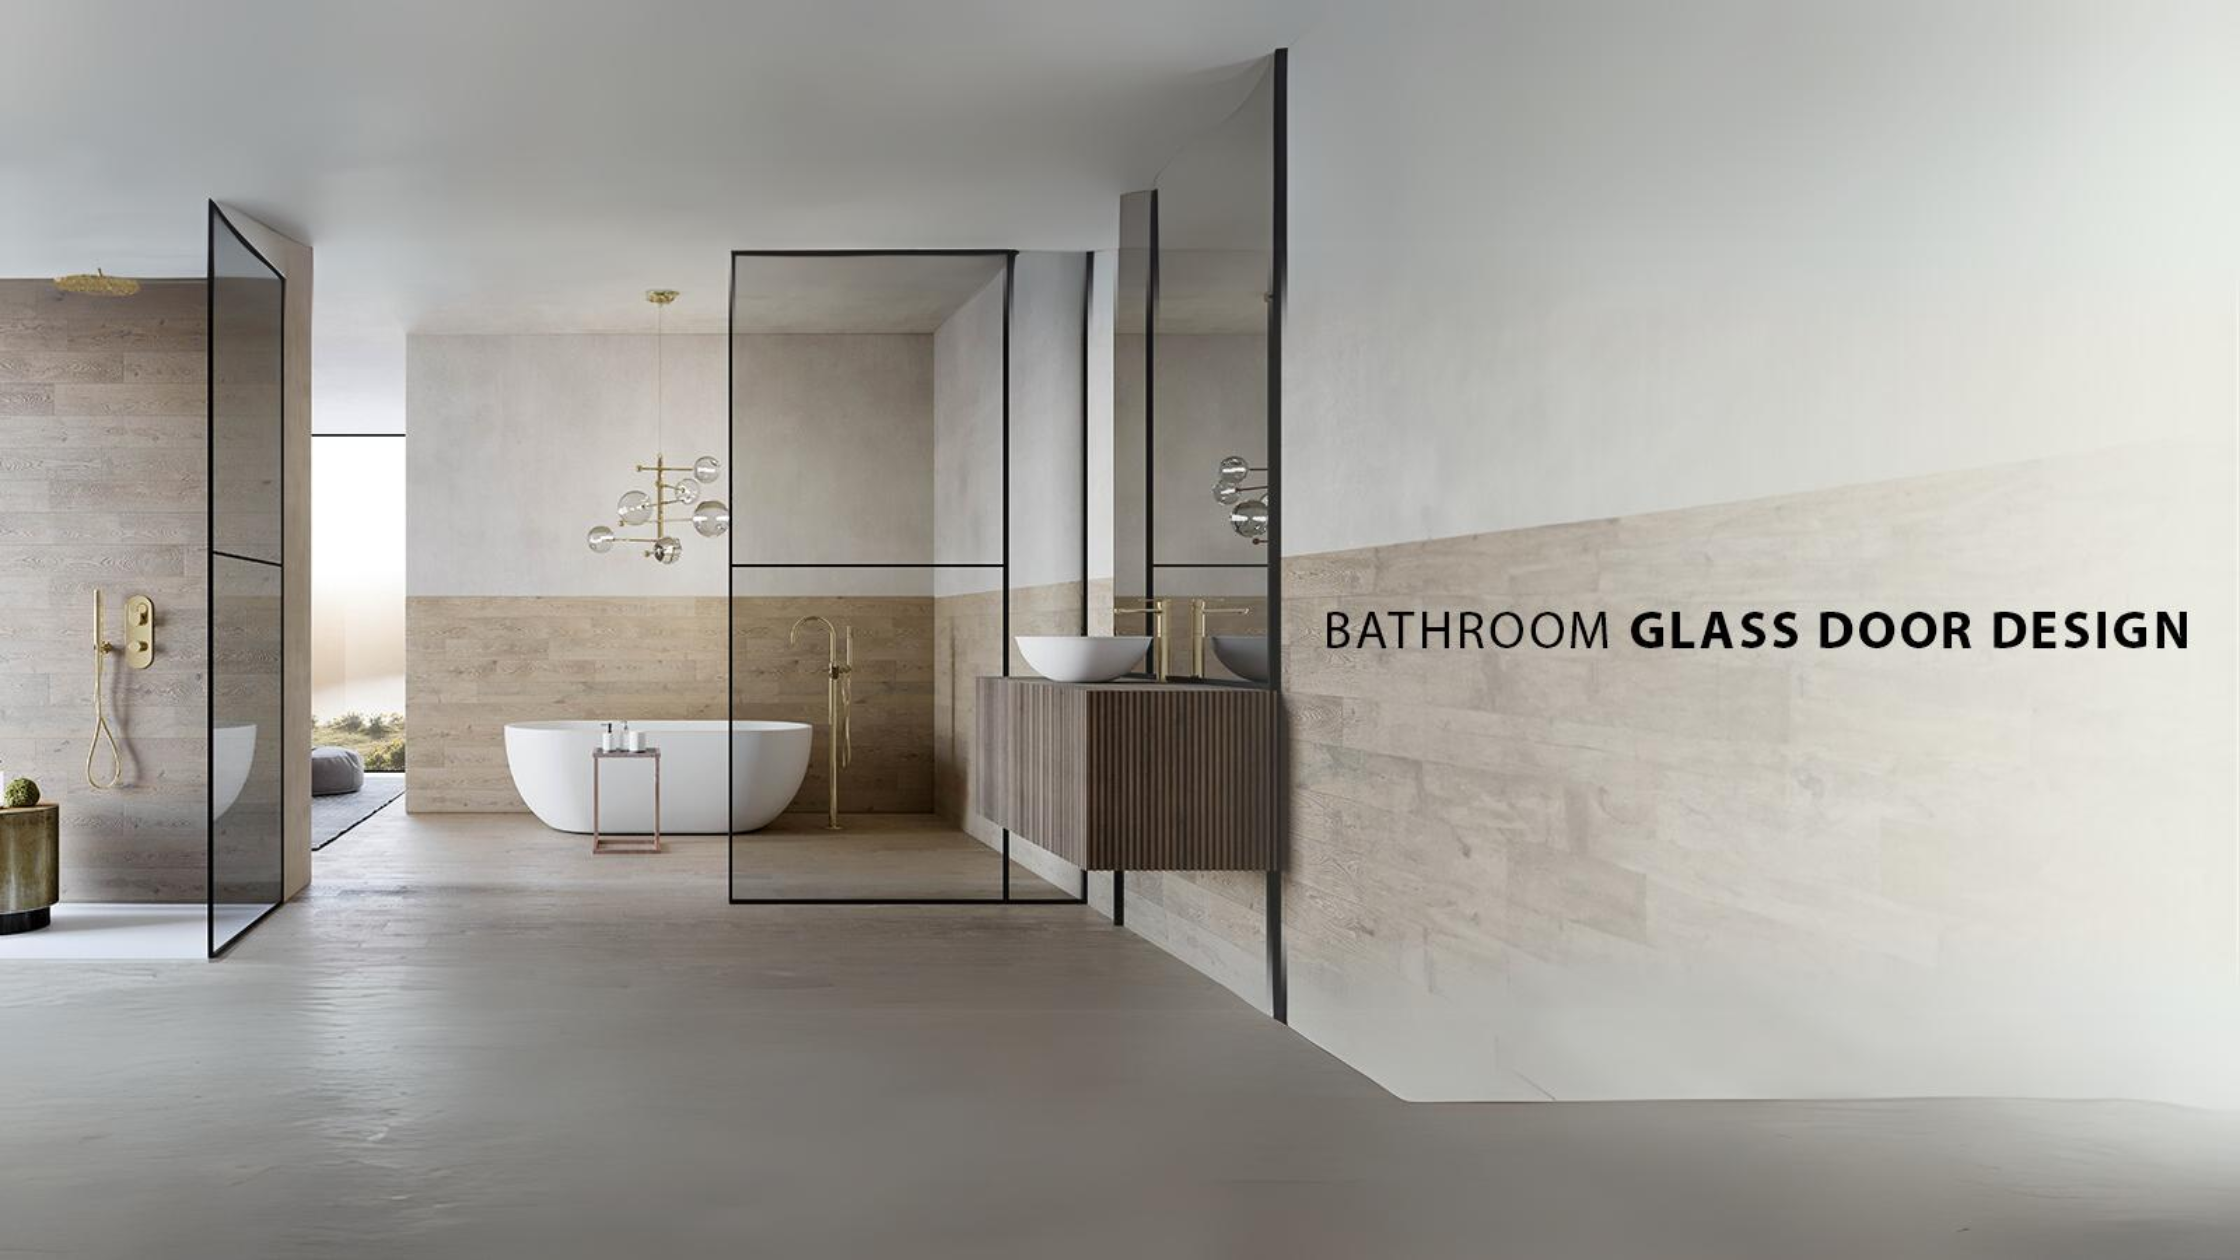 BATHROOM GLASS DOORS: DESIGNS TO ADD STYLE